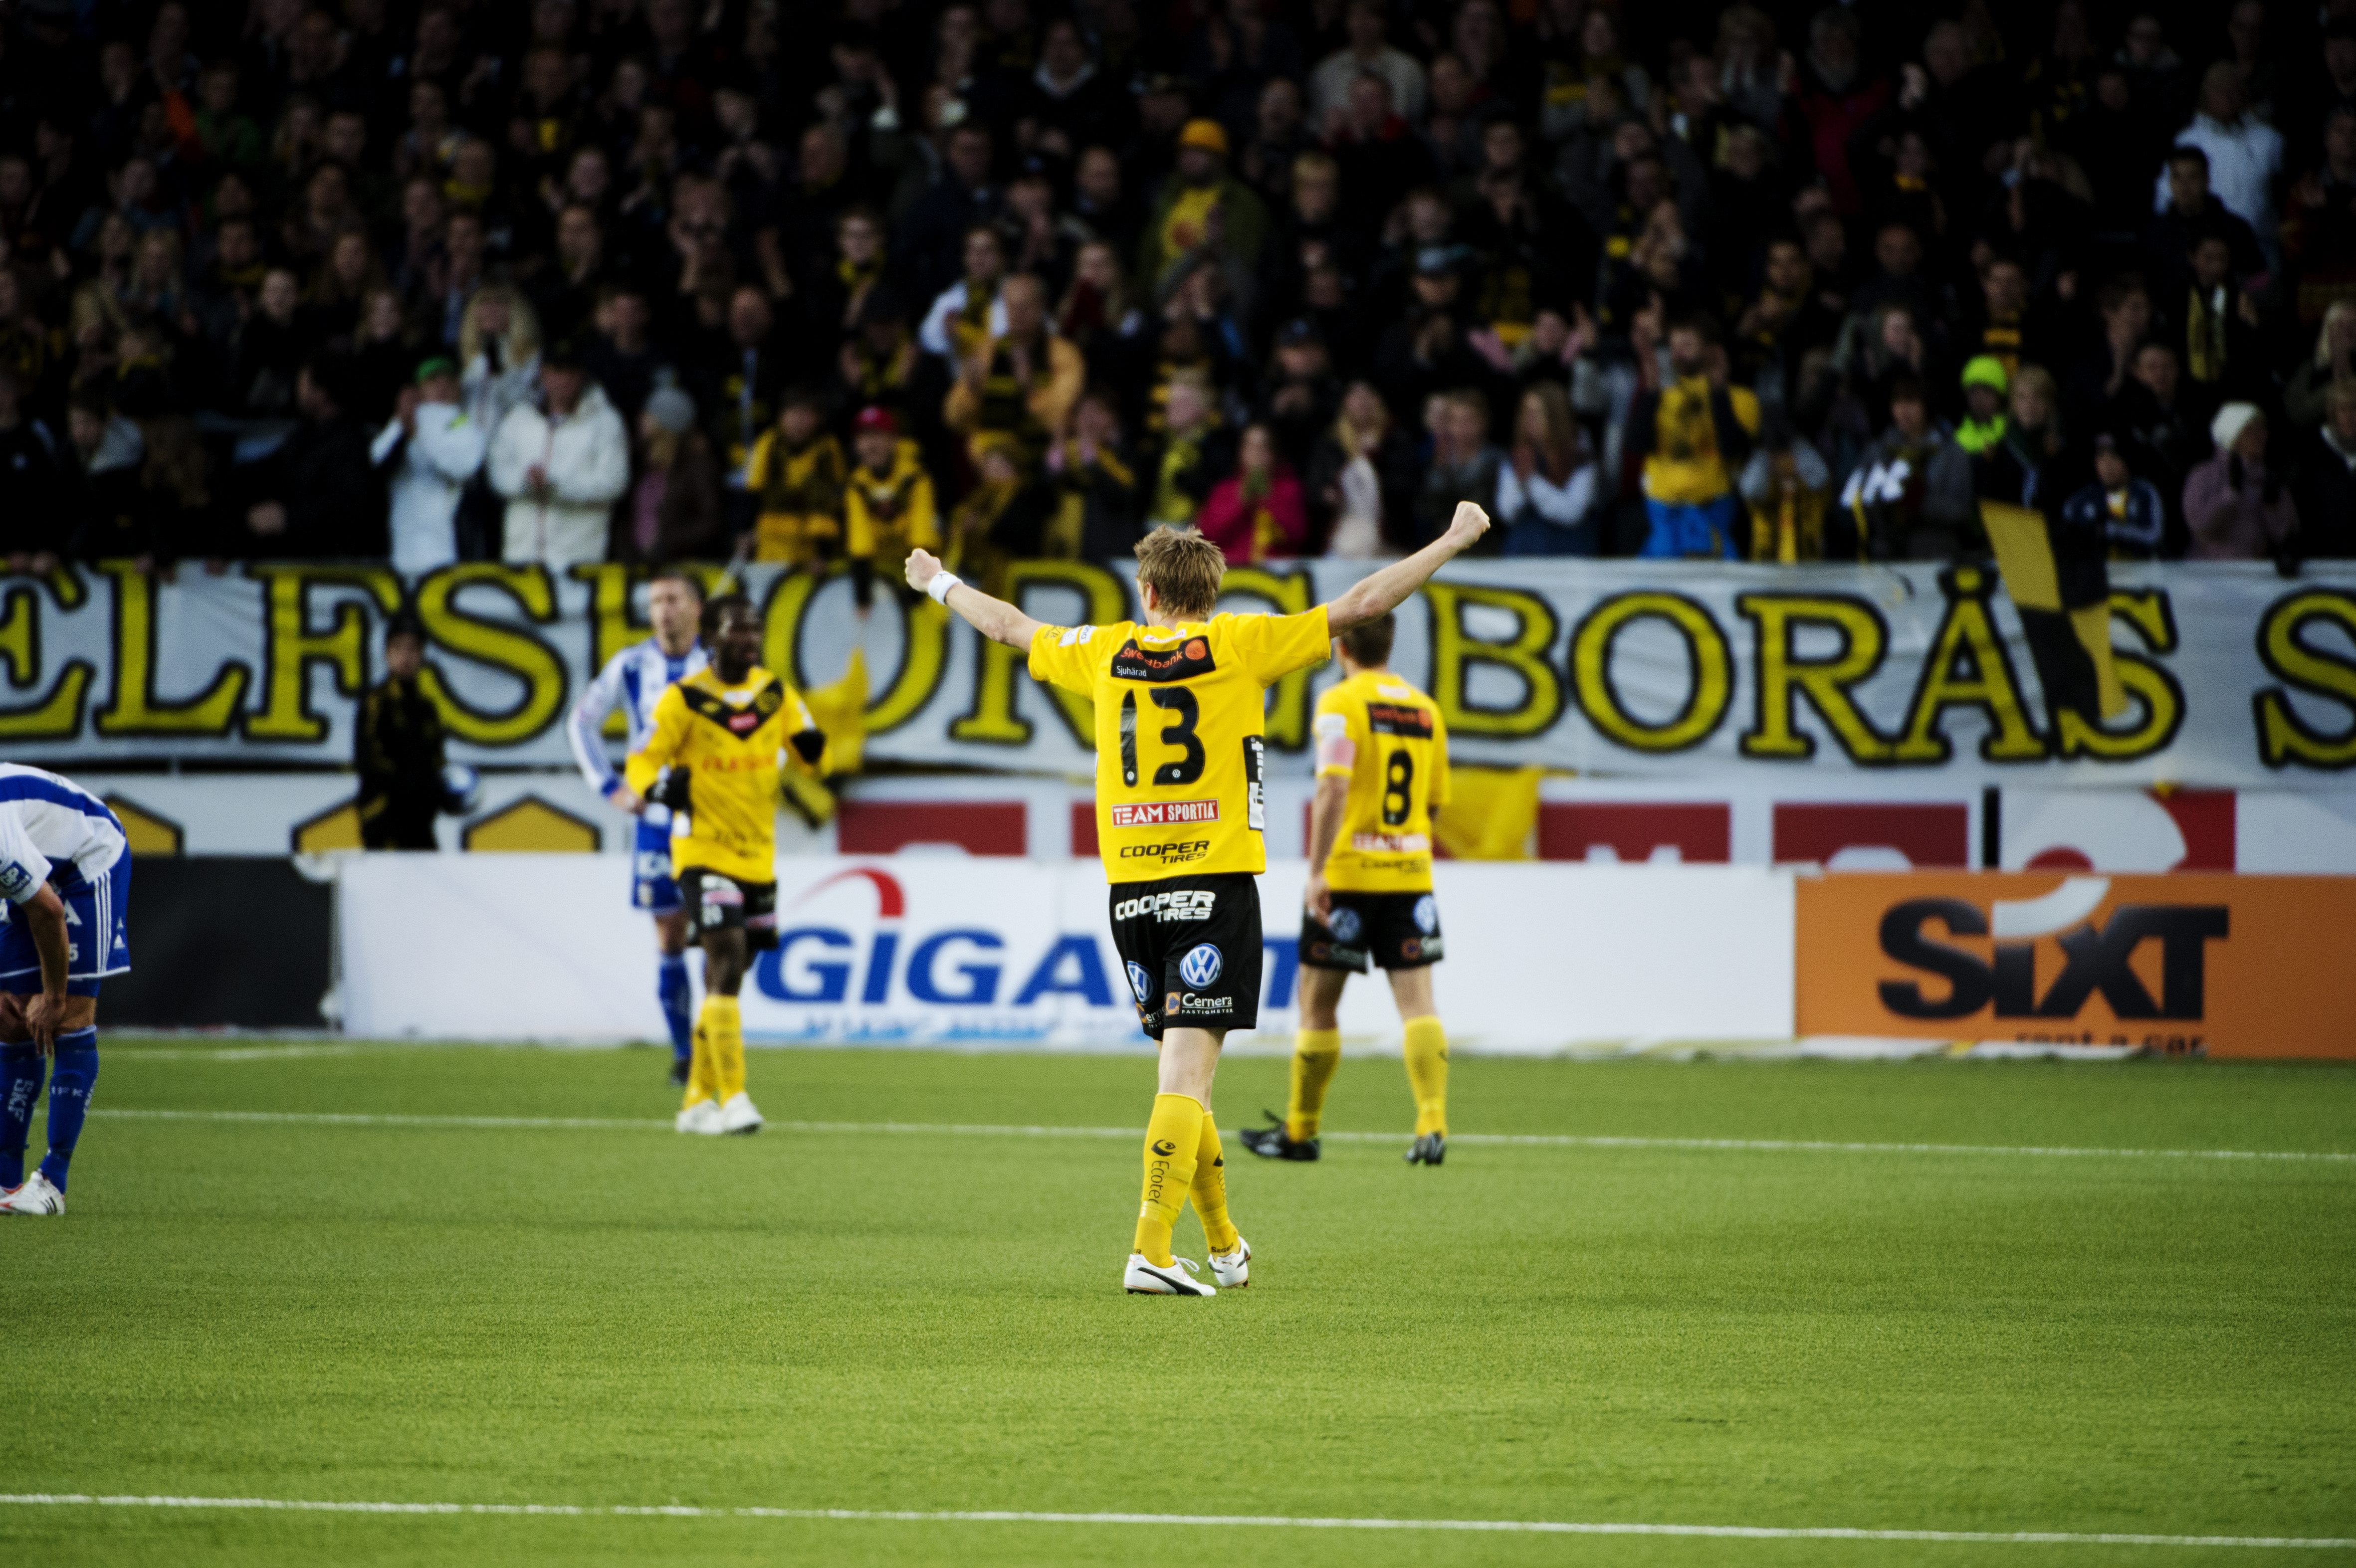 Fotboll, Allsvenskan, AIK, David Elm, IF Elfsborg